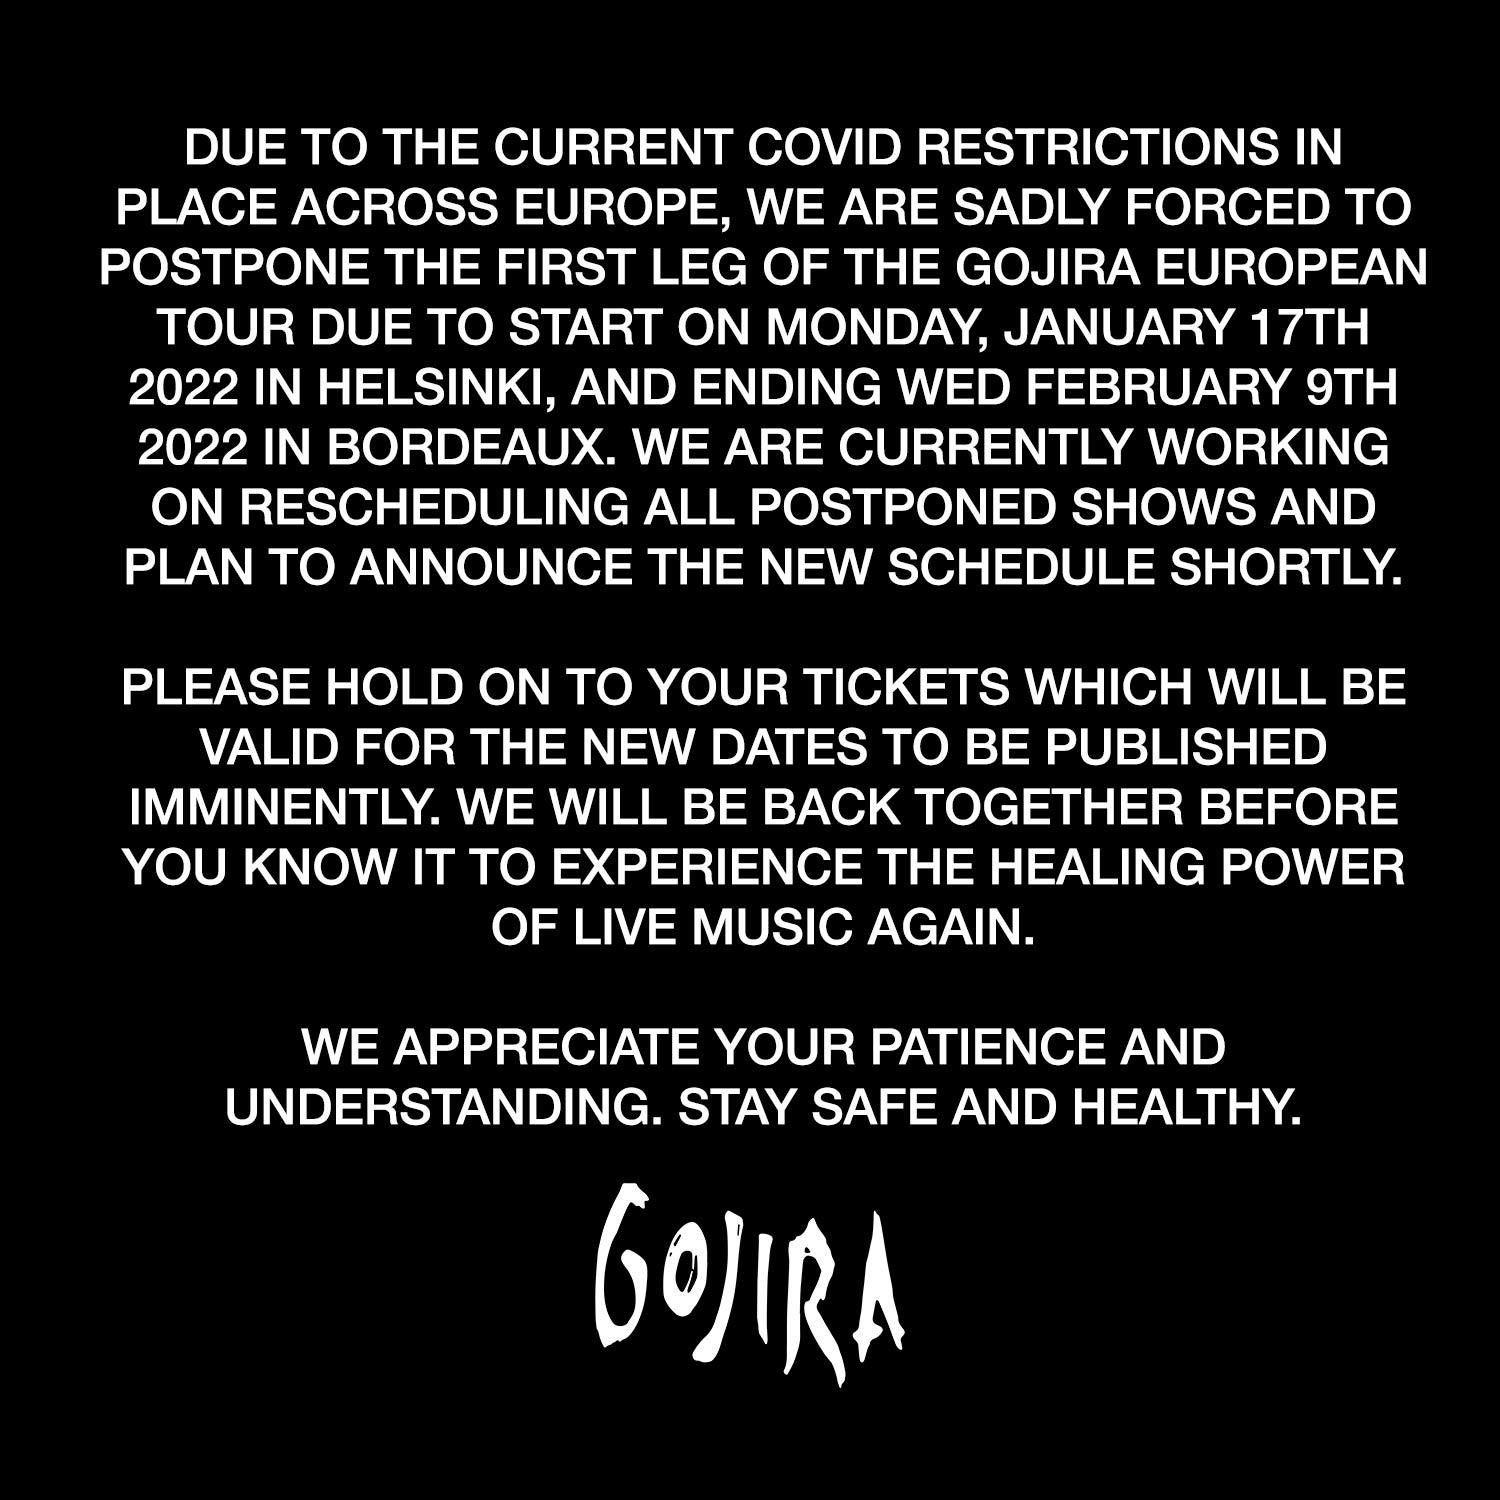 Gojira message tour 2022 postponed